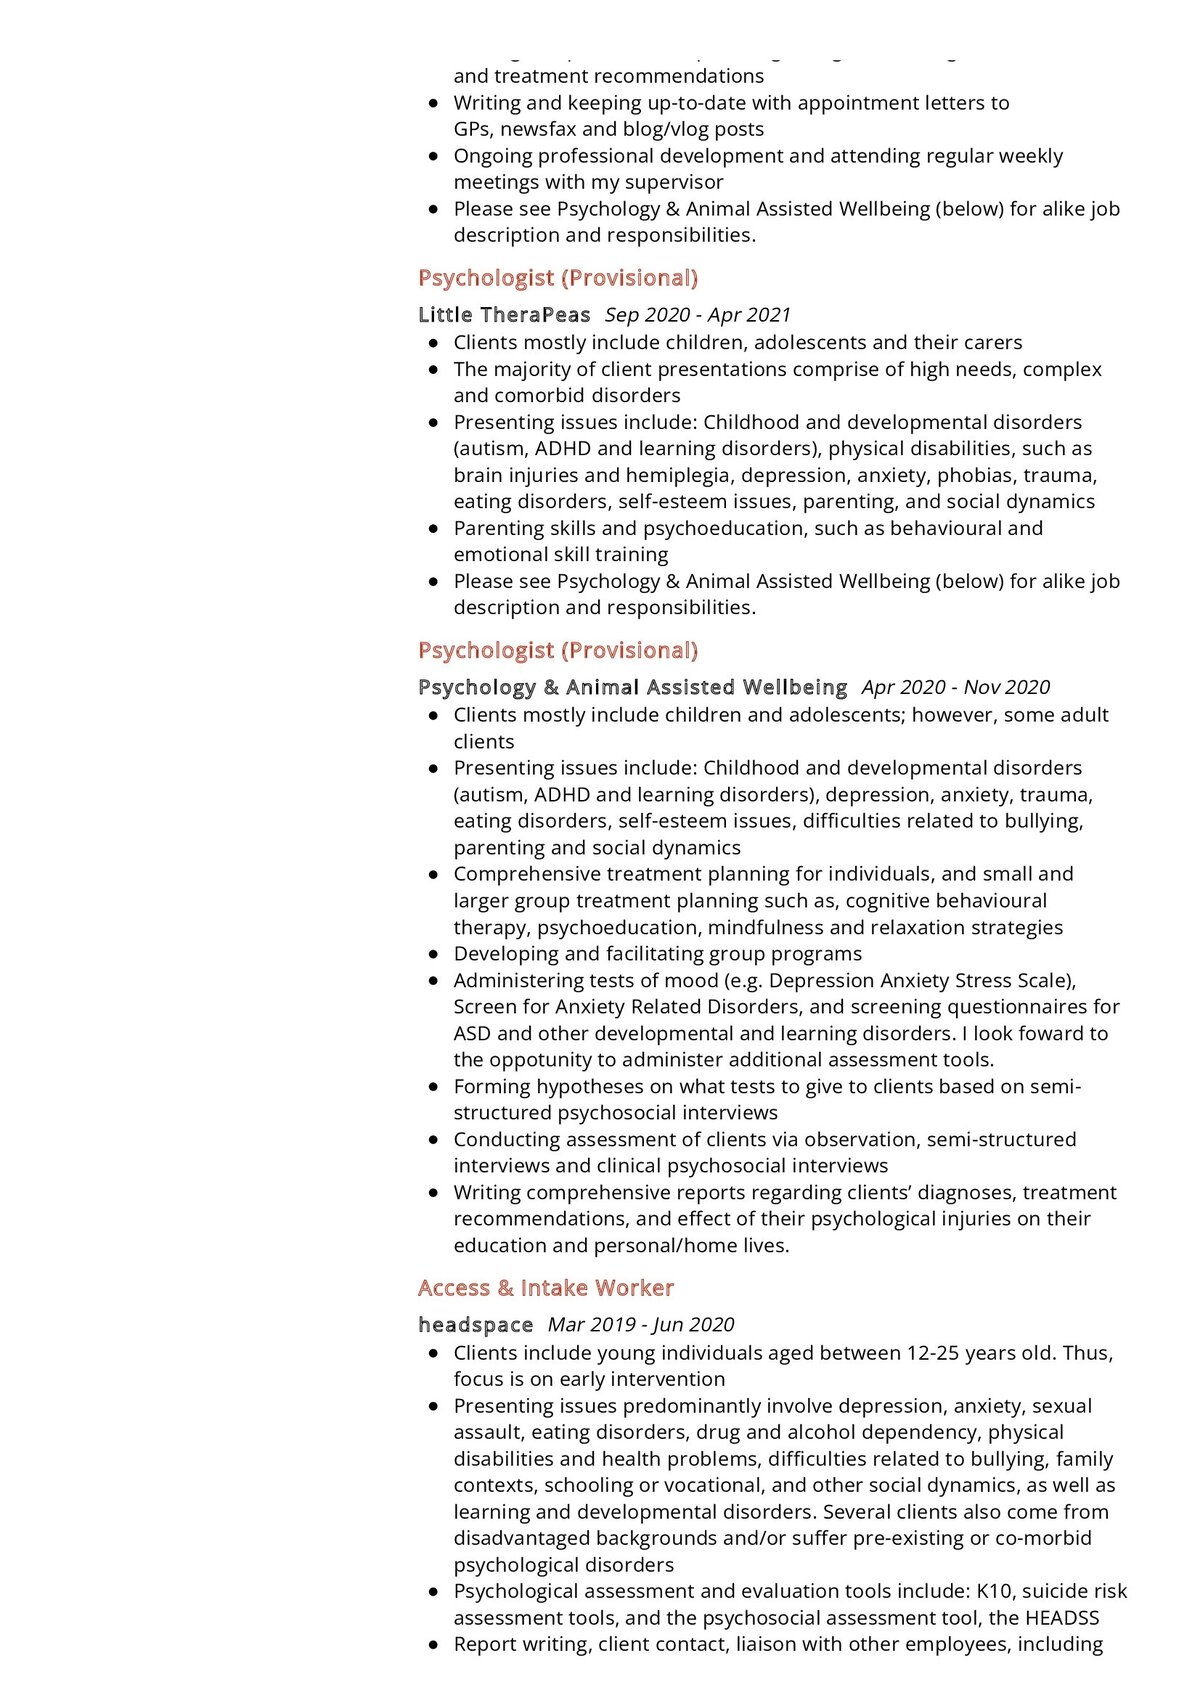 objective resume for psychology